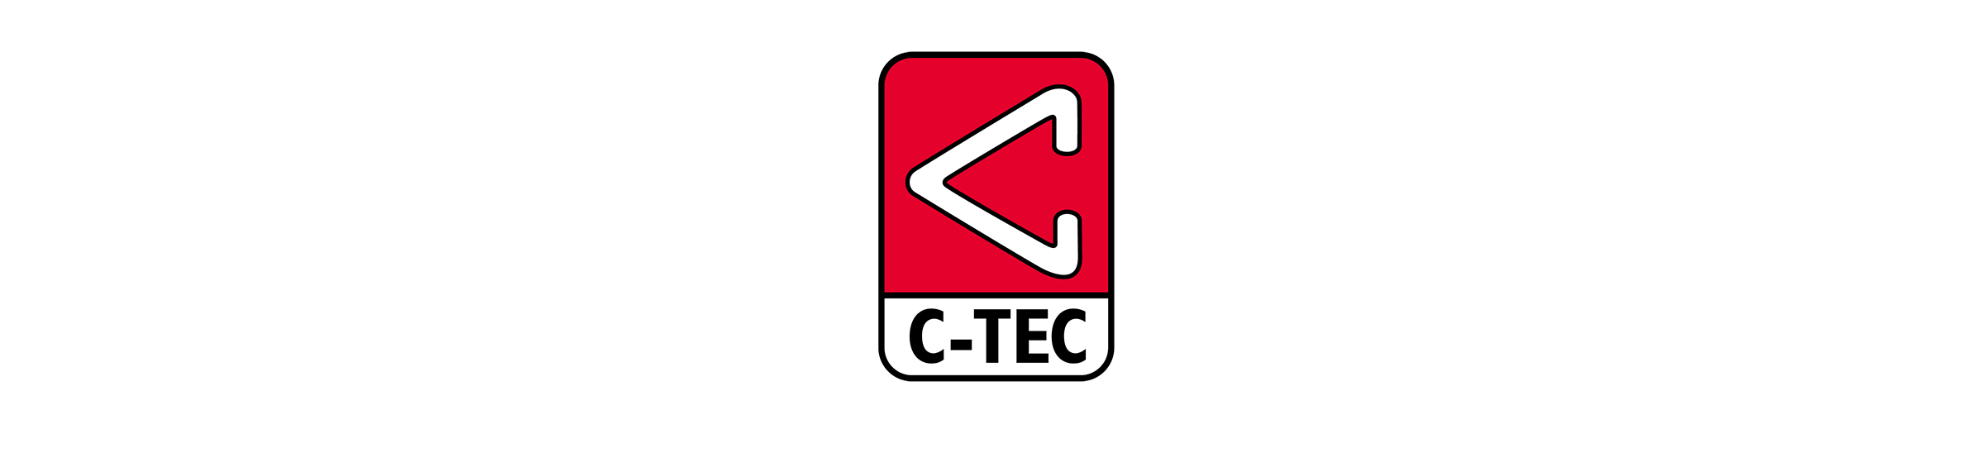 C-Tec fire alarms - Fire Trade Supplies